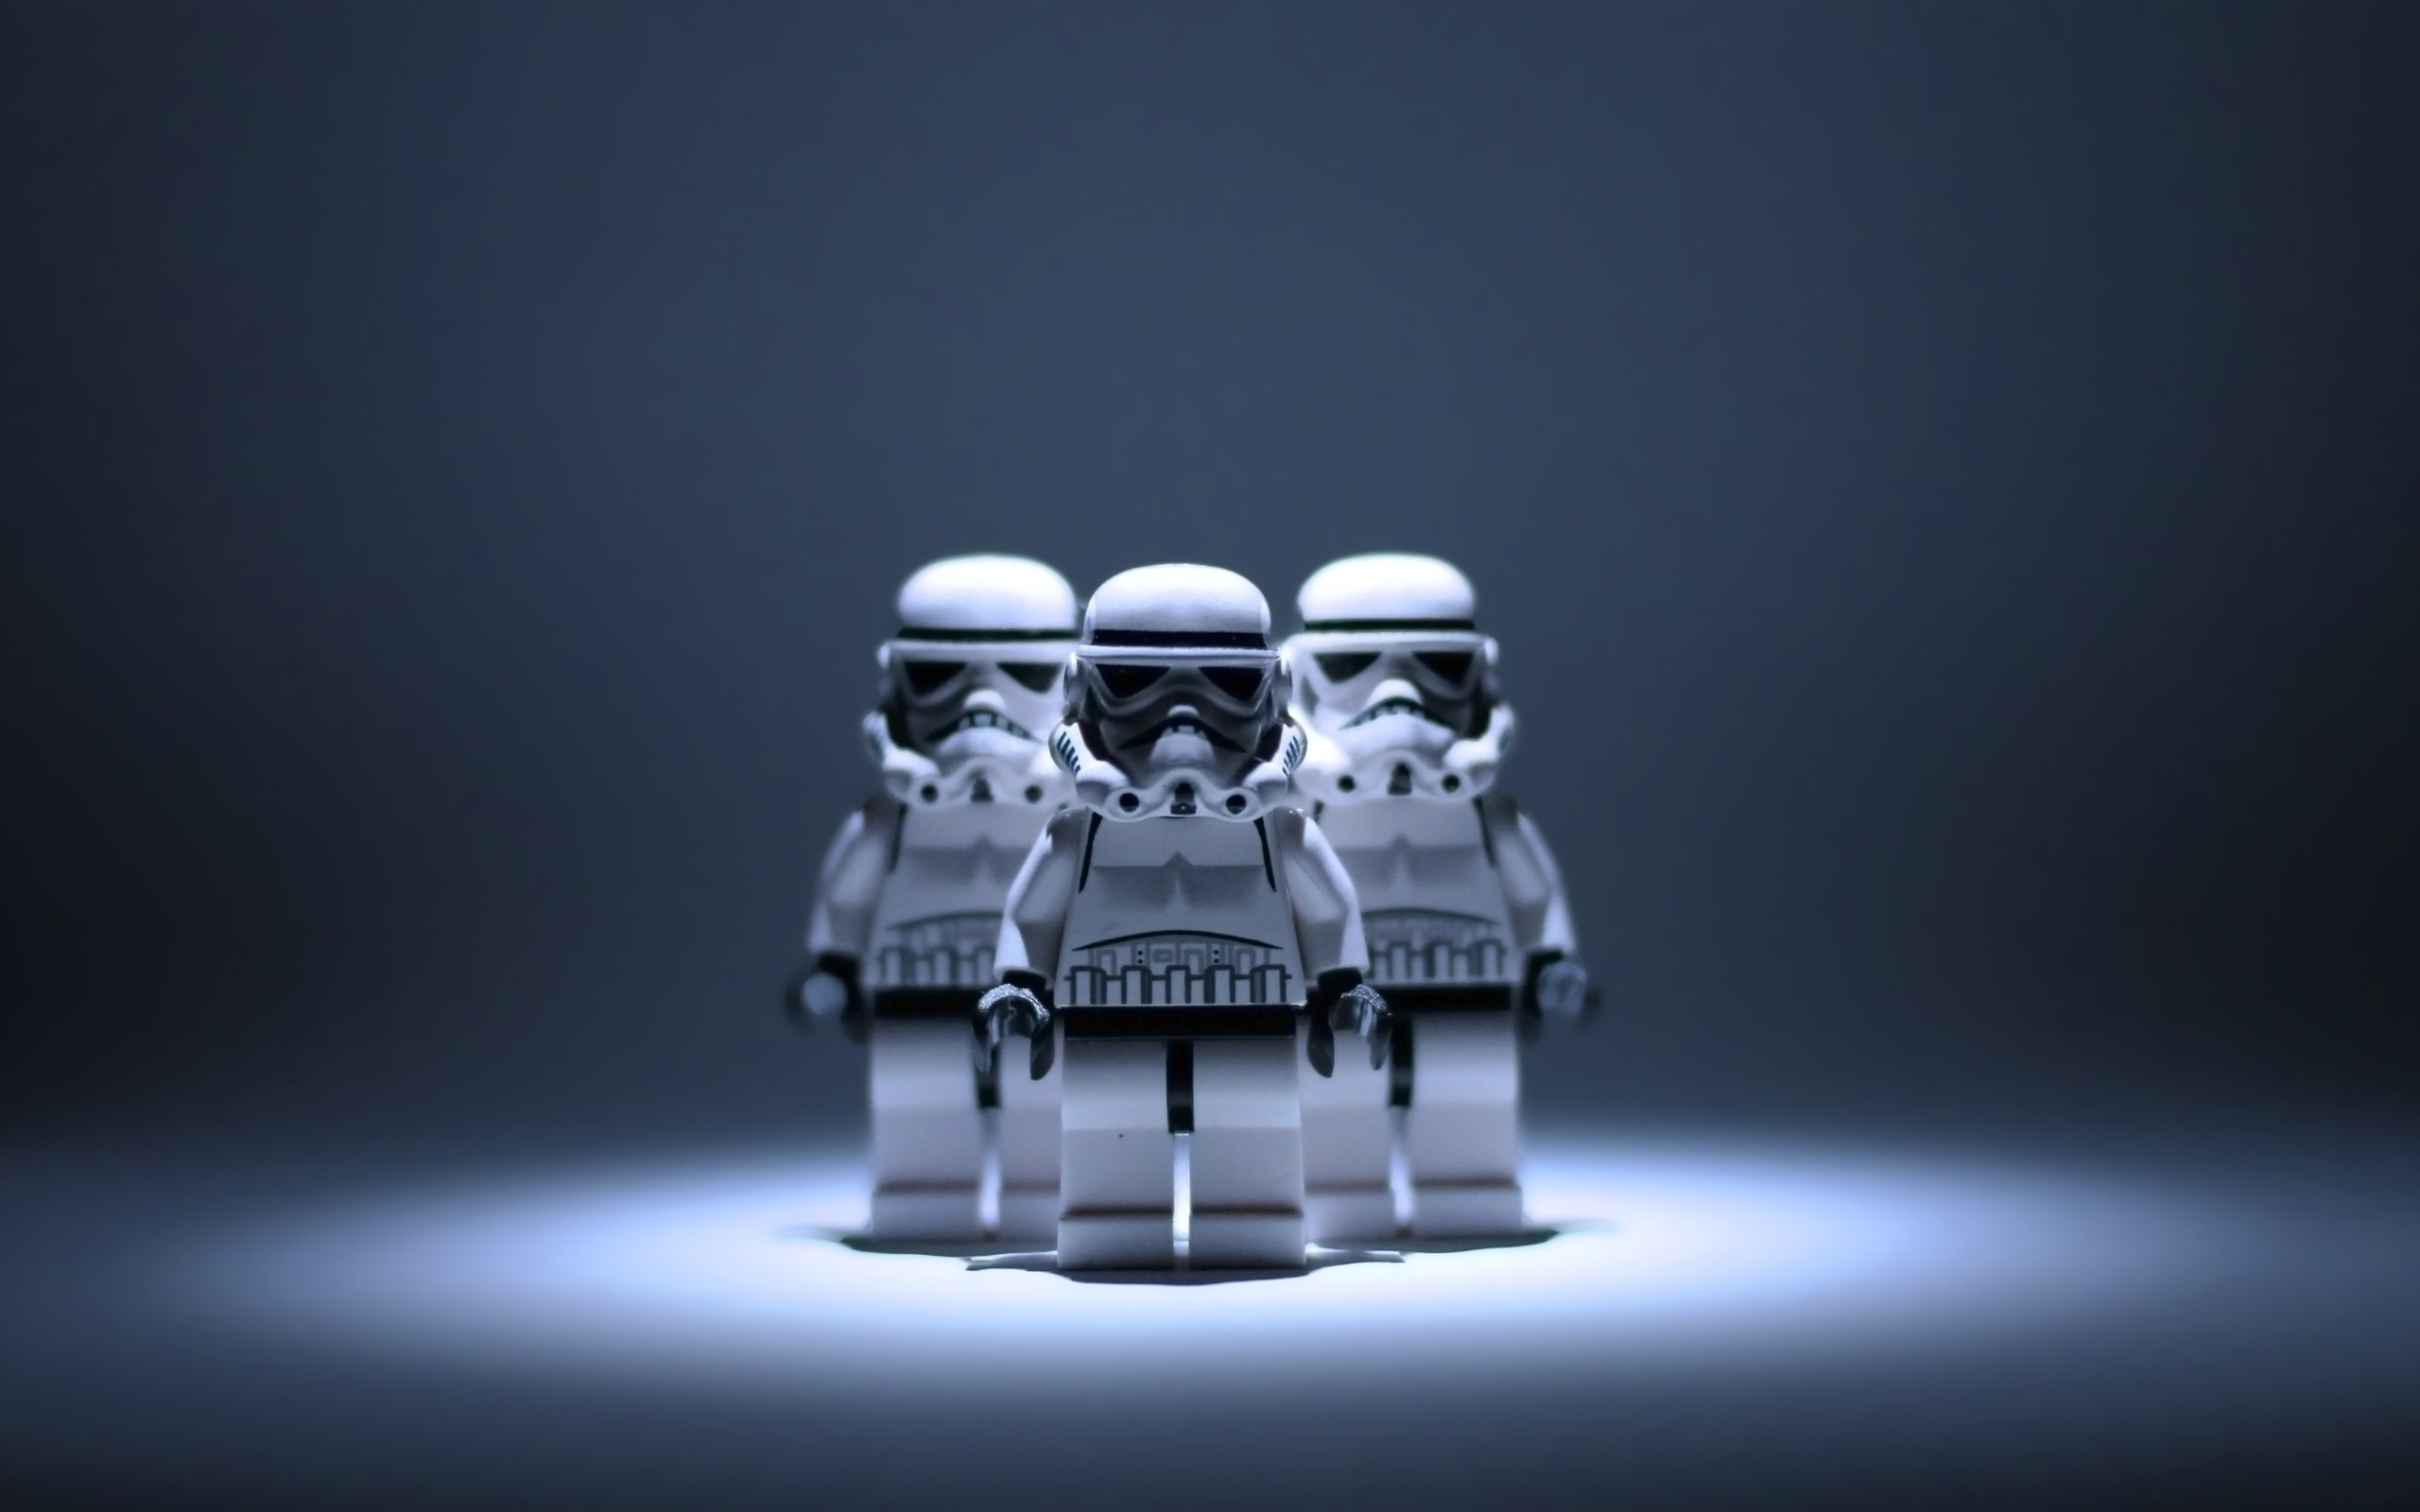 Lego Star Wars 1080p Wallpapers Movie Wallpaper - LocaLwom